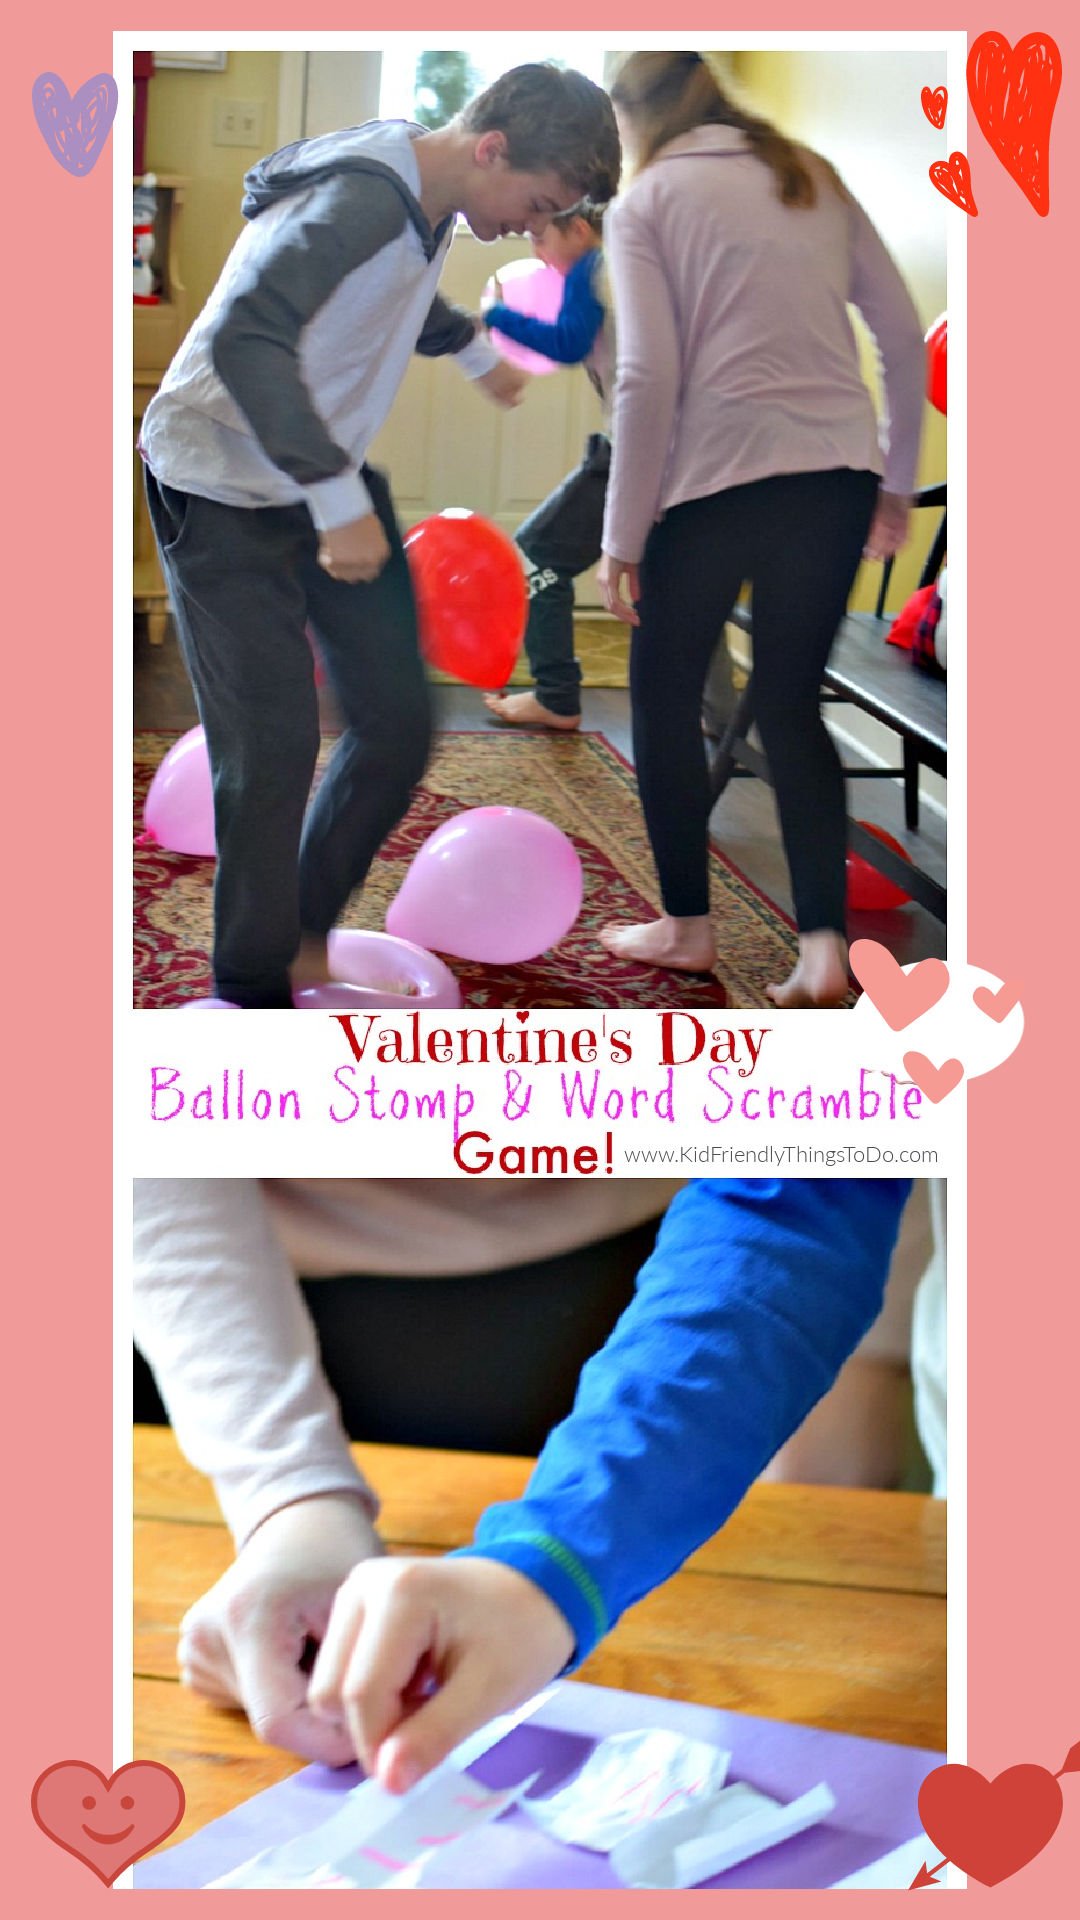 Valentine Game for kids Balloon Stomp